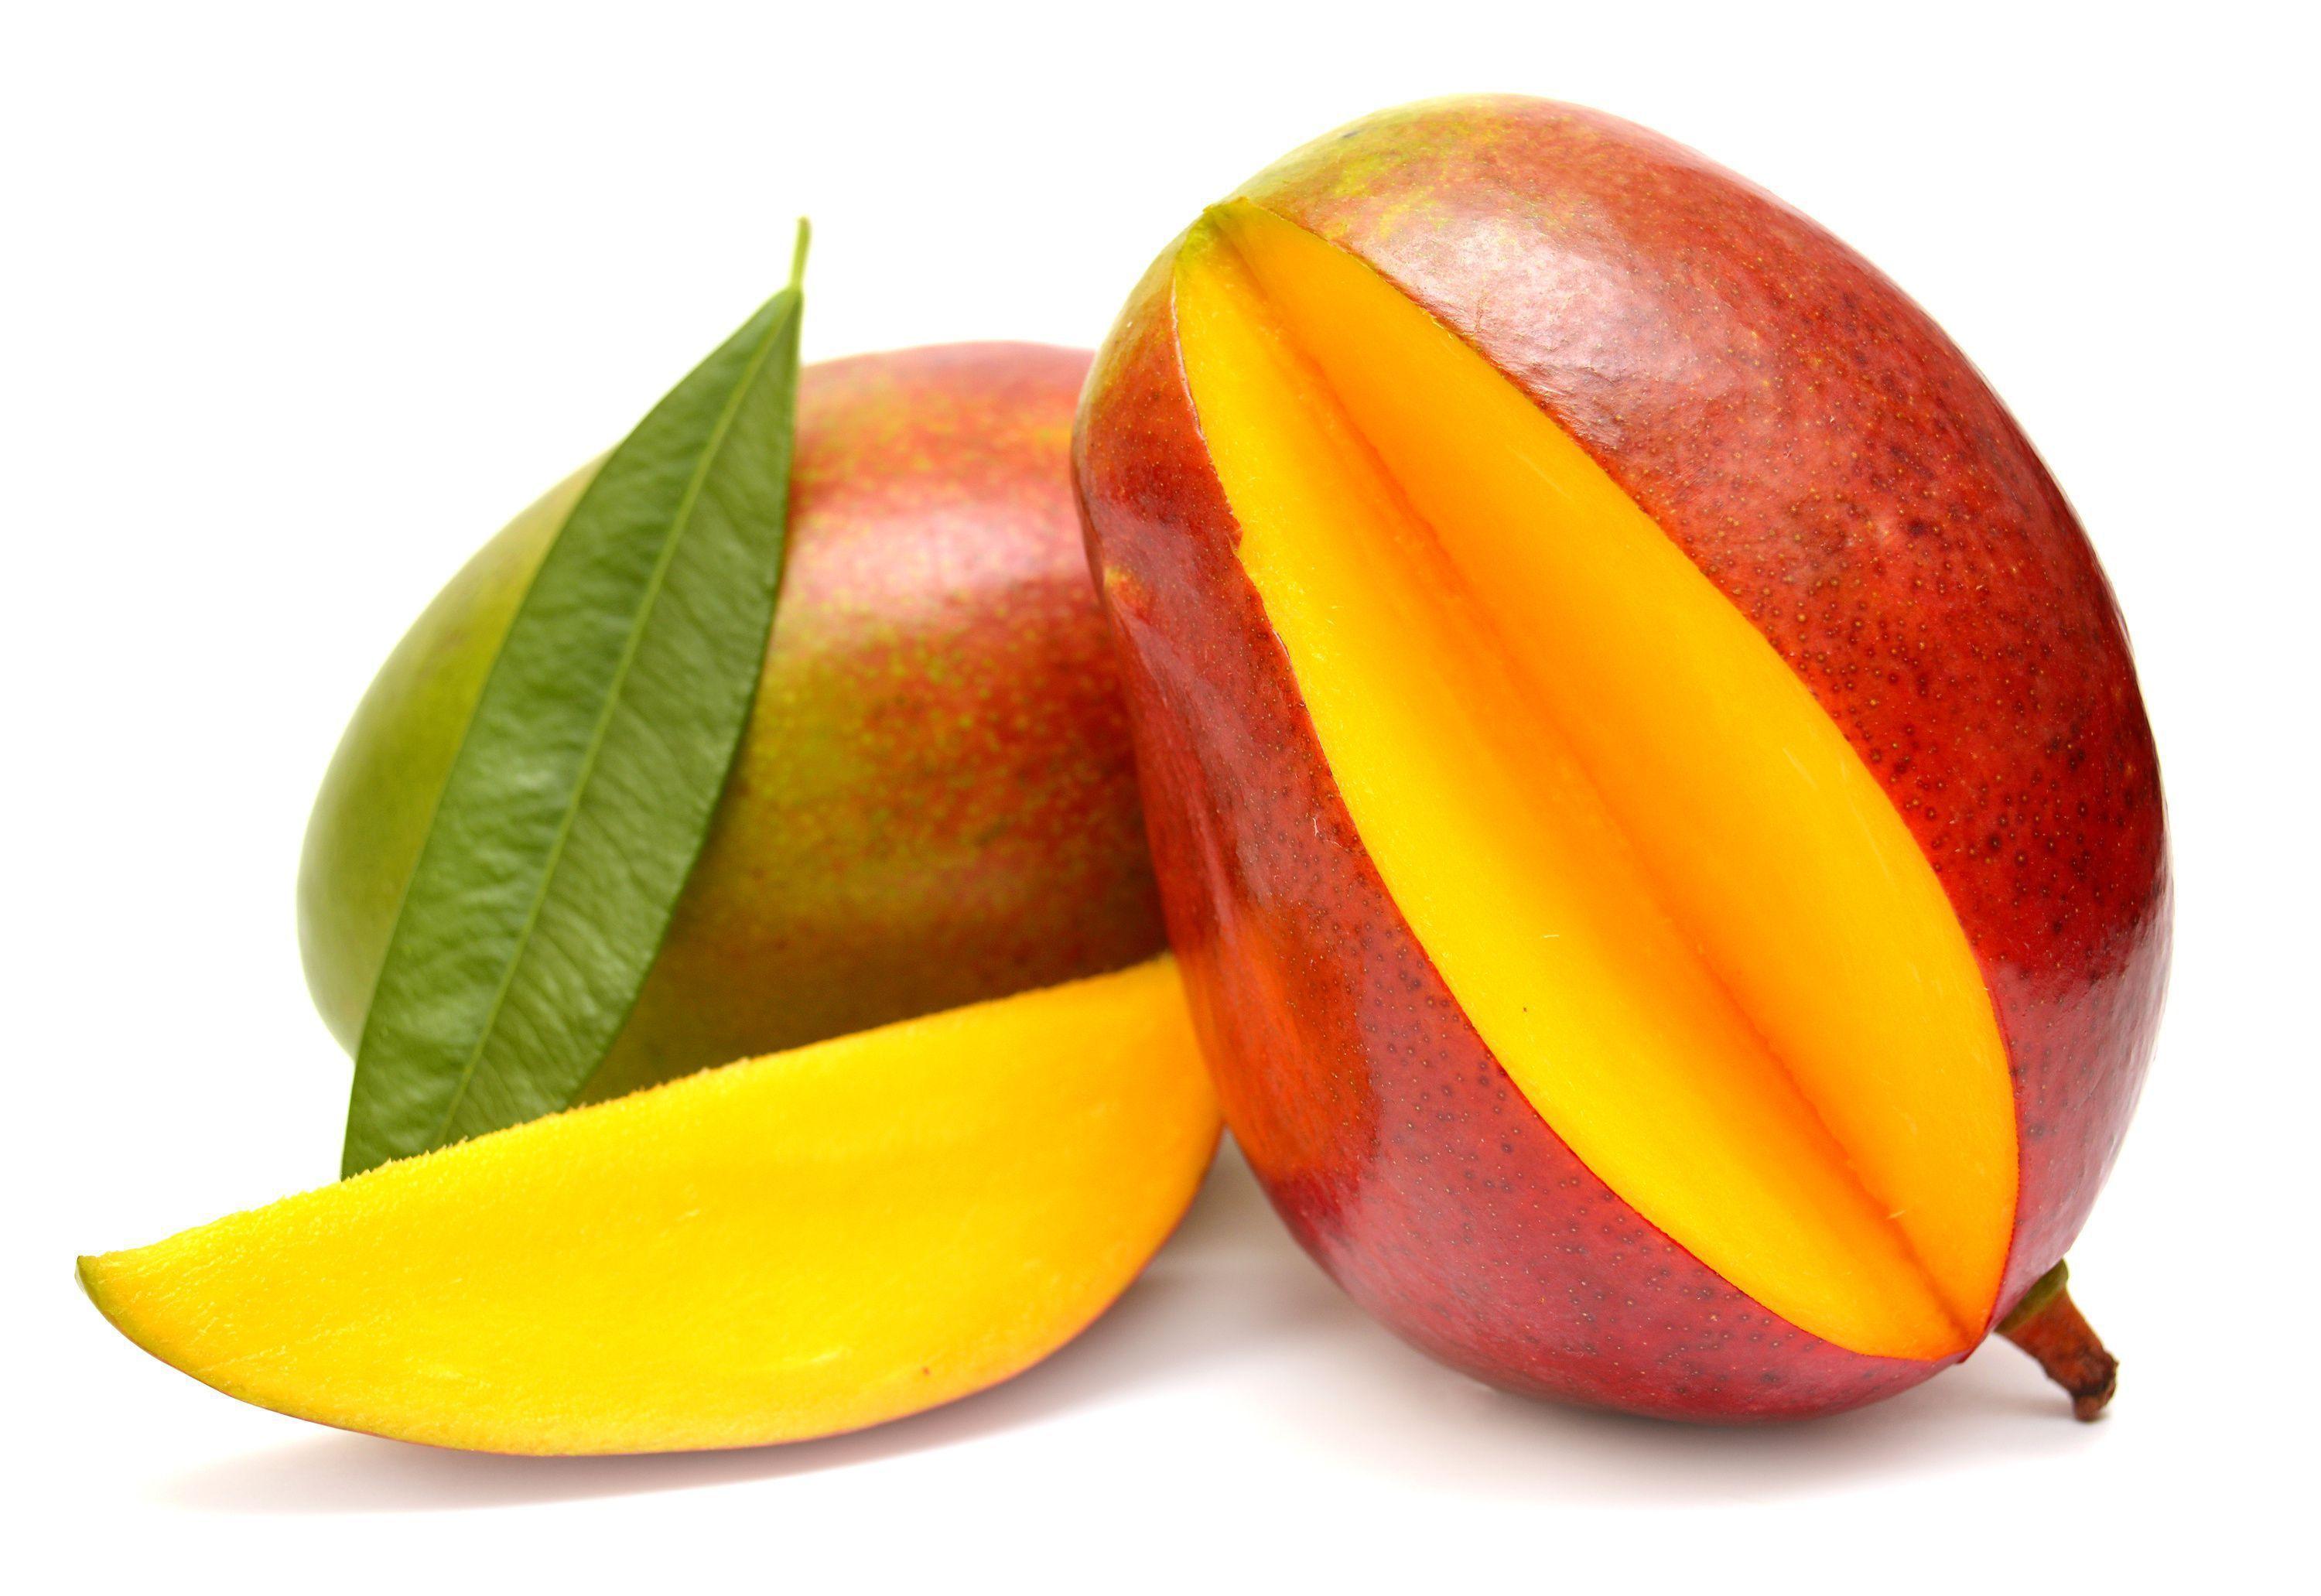 Mango Wallpapers - Top Free Mango Backgrounds - WallpaperAccess